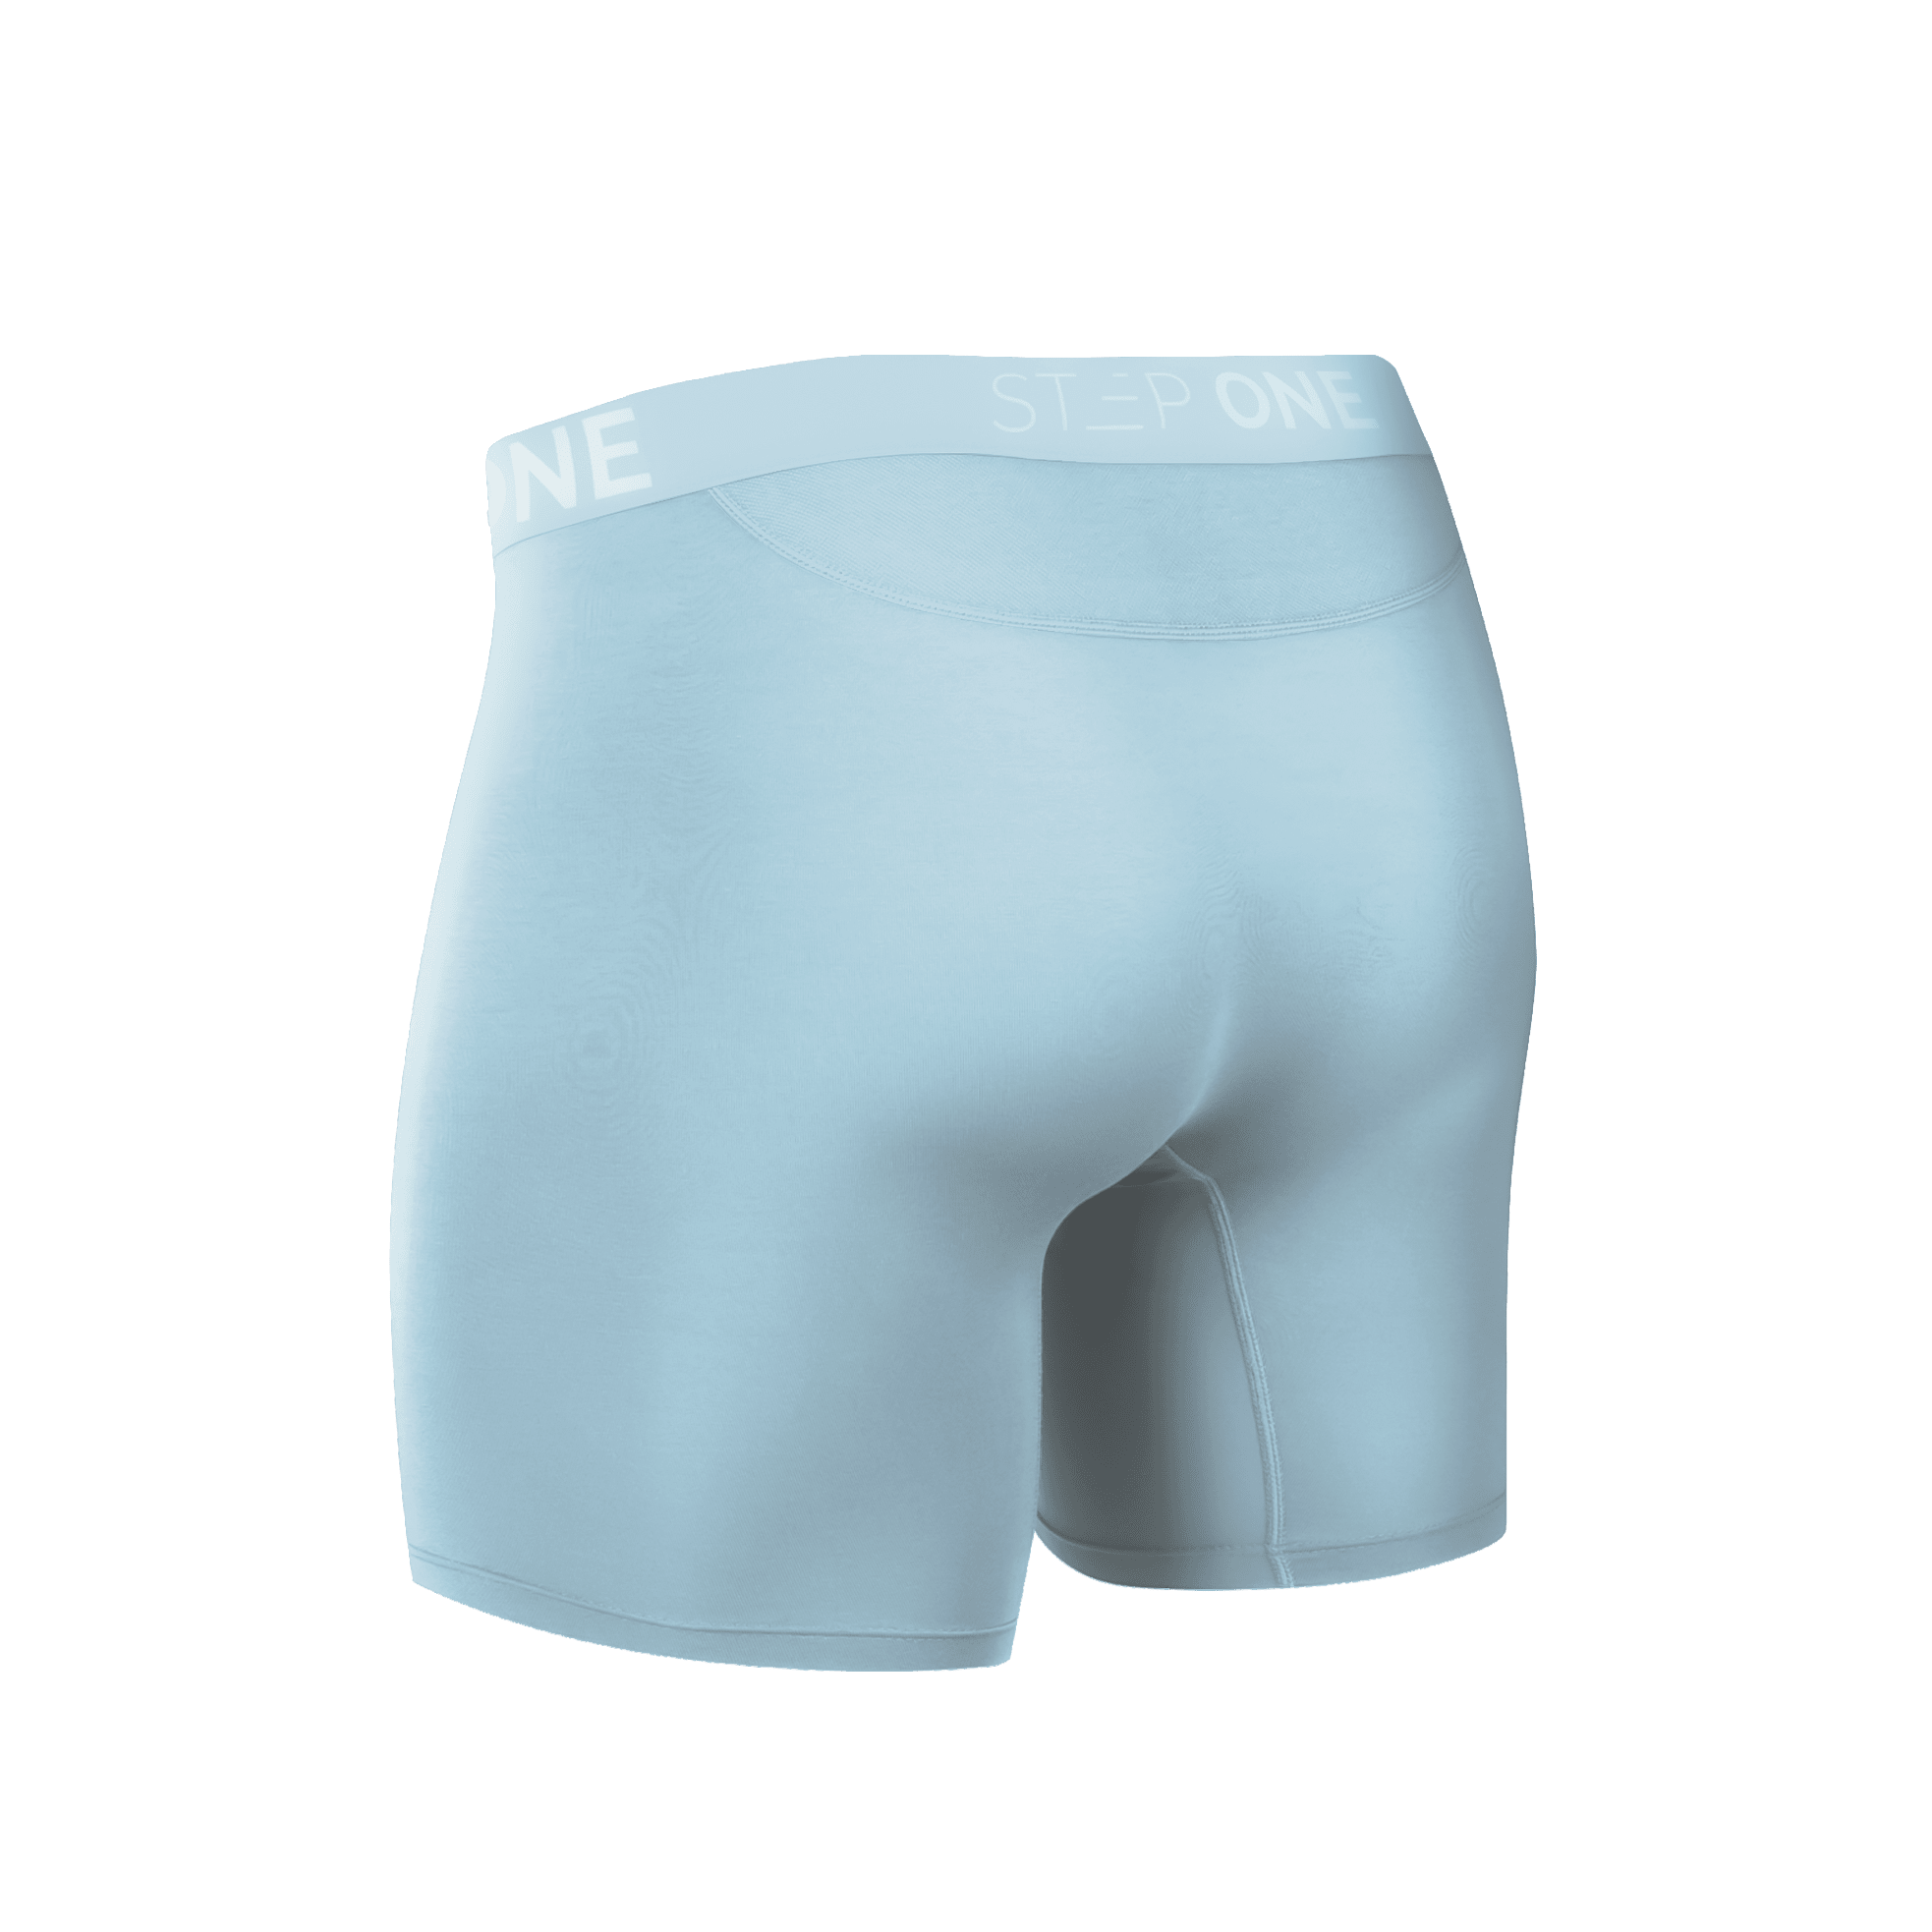 Boxer Brief - Ice Cubes  Step One Men's Bamboo Underwear